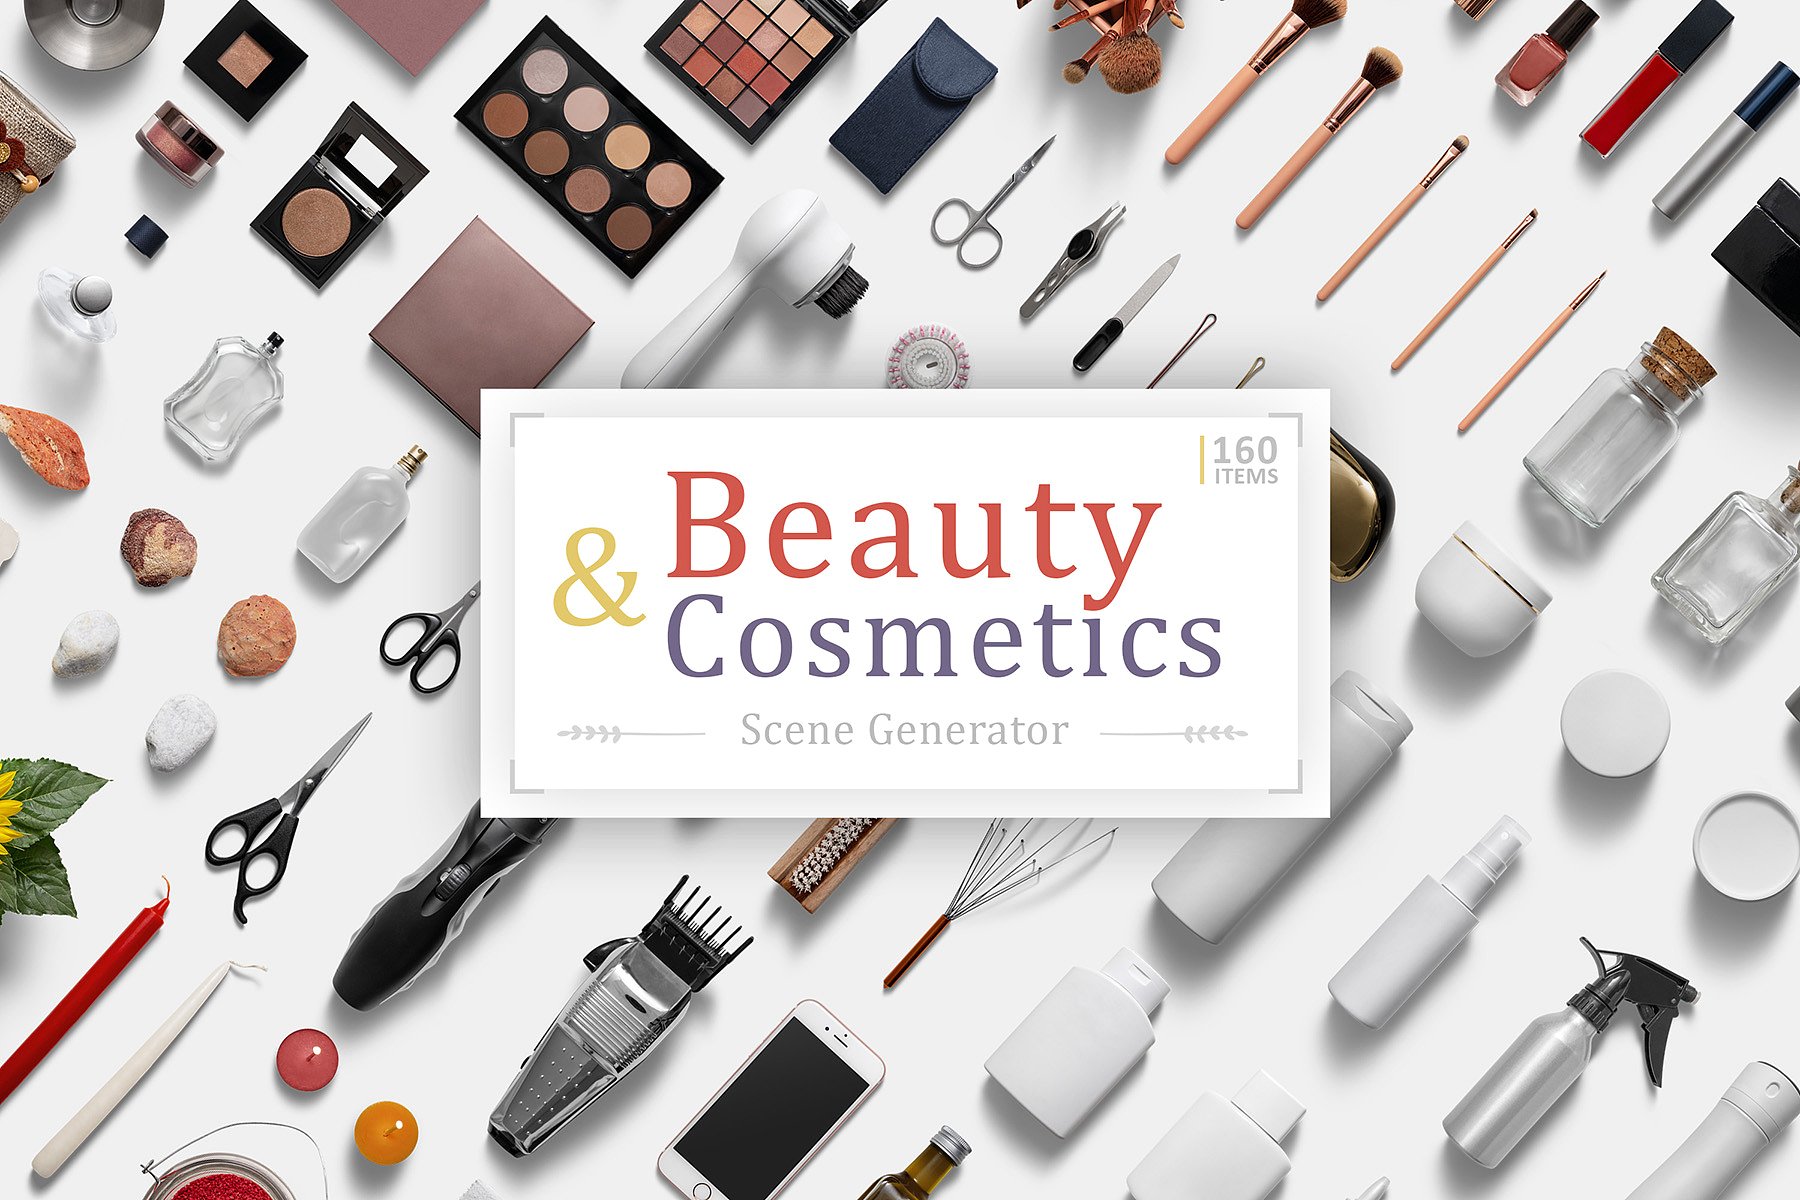 美容和化妆品系列产品品牌展示样机大全 Beauty And Cosmetics Series Products Brand Display Prototype插图